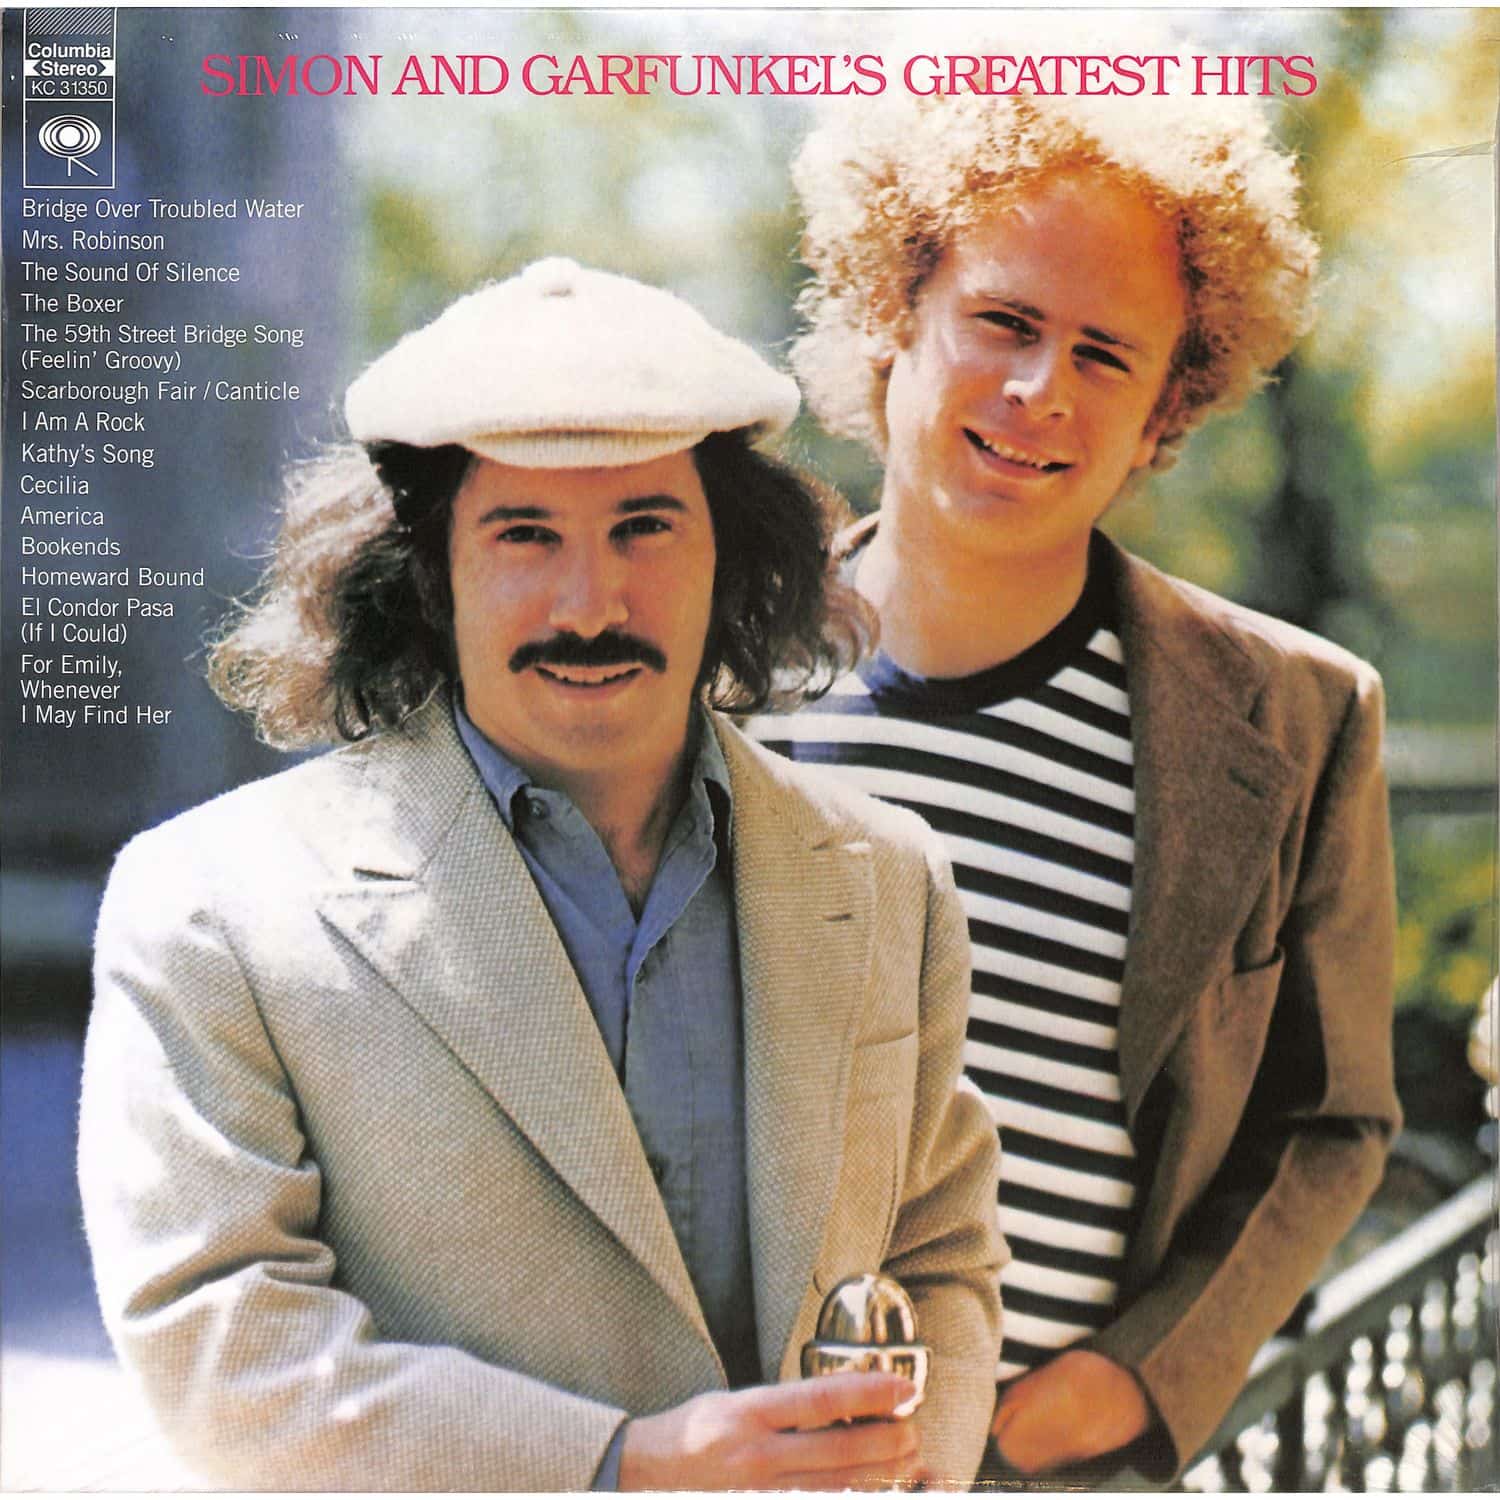 Simon & Garfunkel - GREATEST HITS 